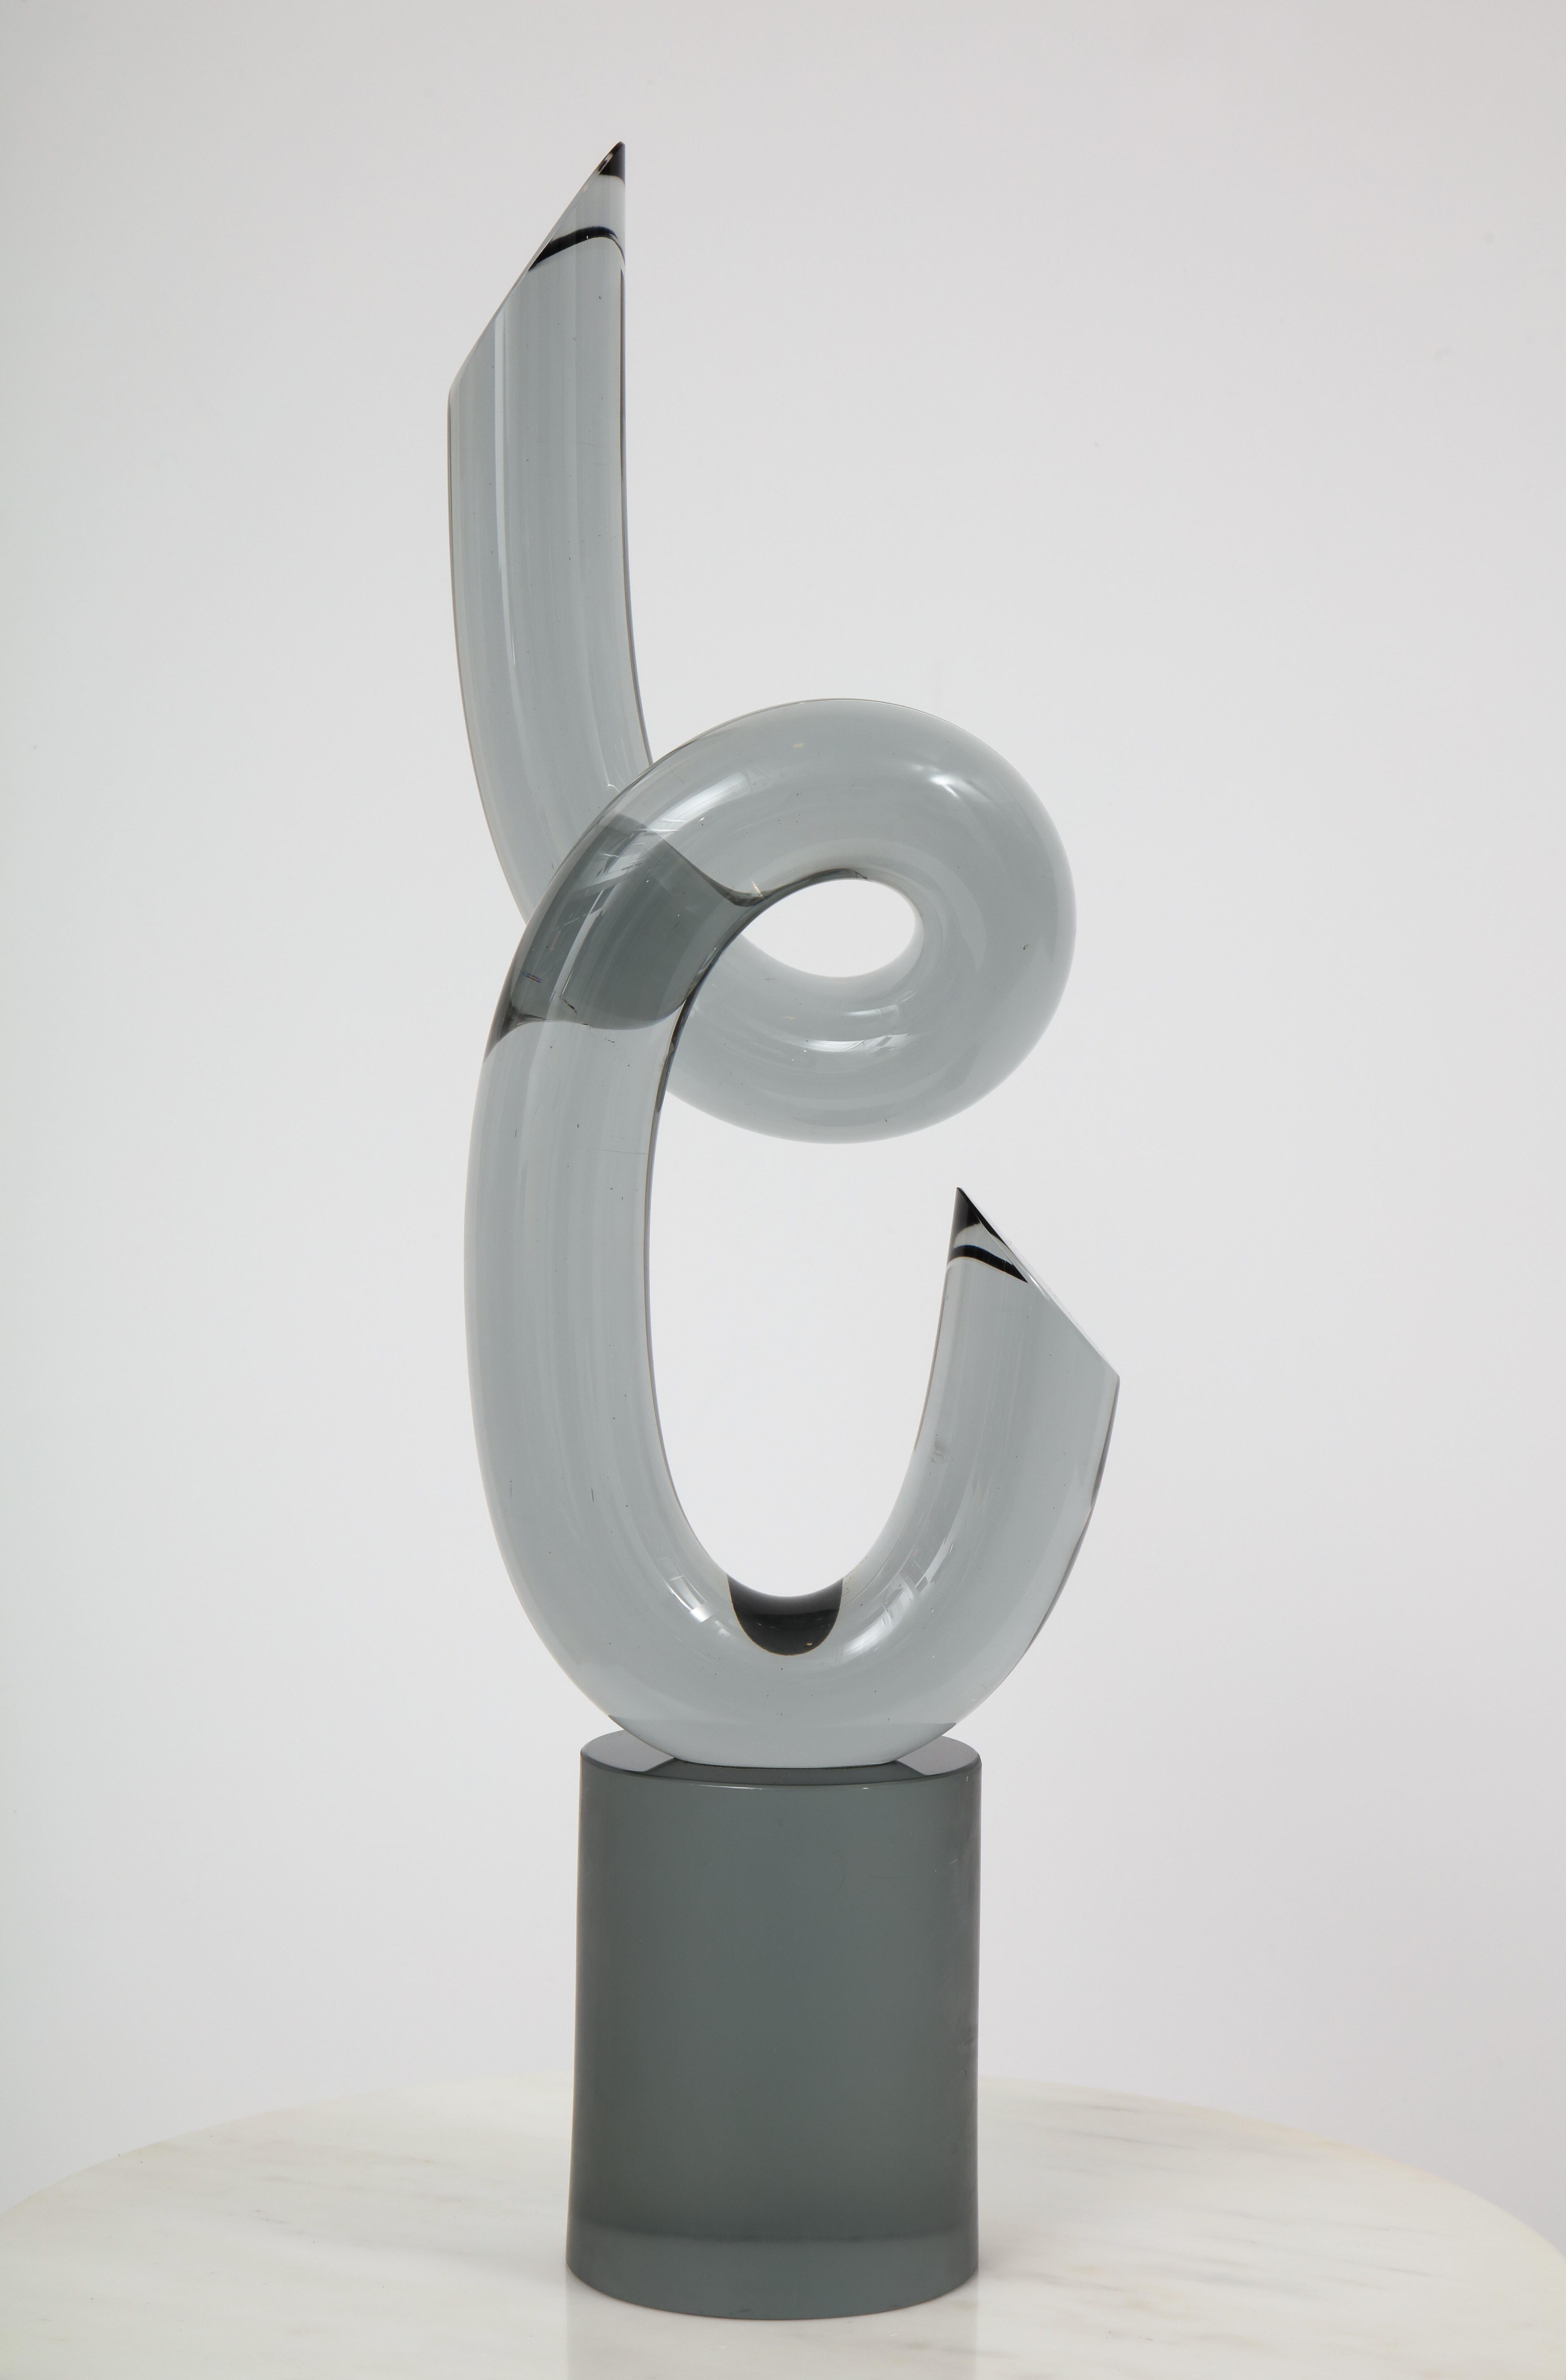 Stunning 1970s modern abstract glass sculpture designed by Elio Raffaeli.